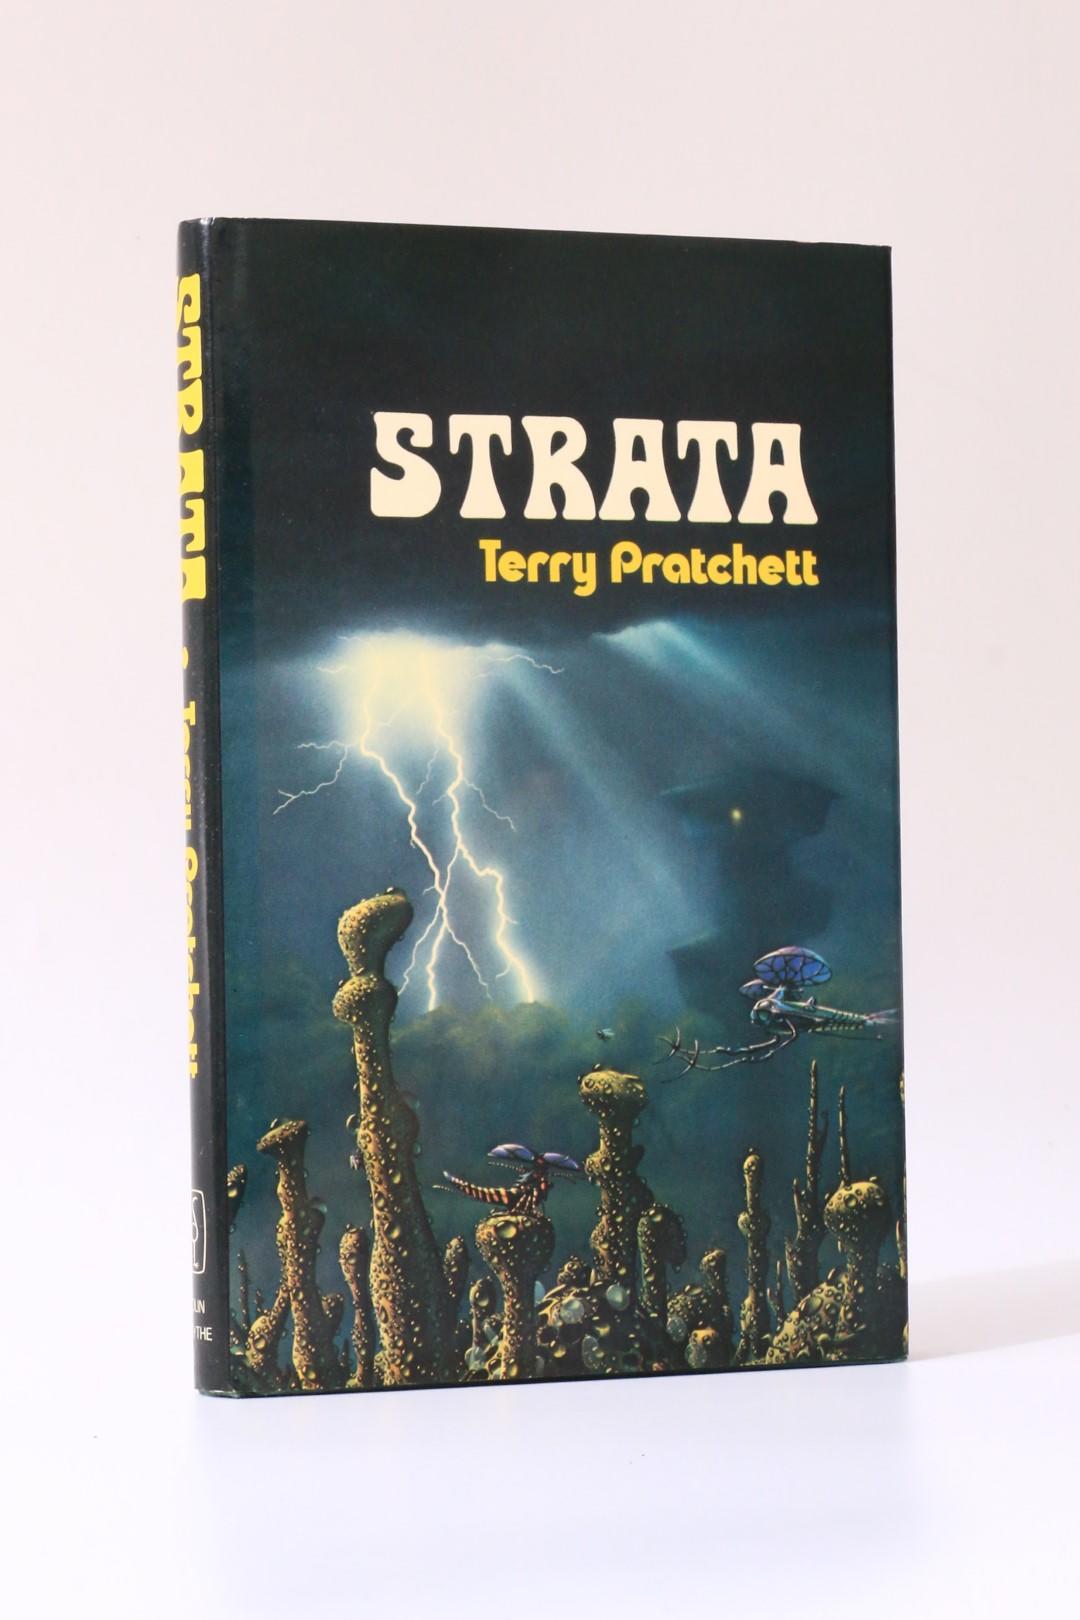 Terry Pratchett - Strata - Colin Smythe, 1981, Signed First Edition.